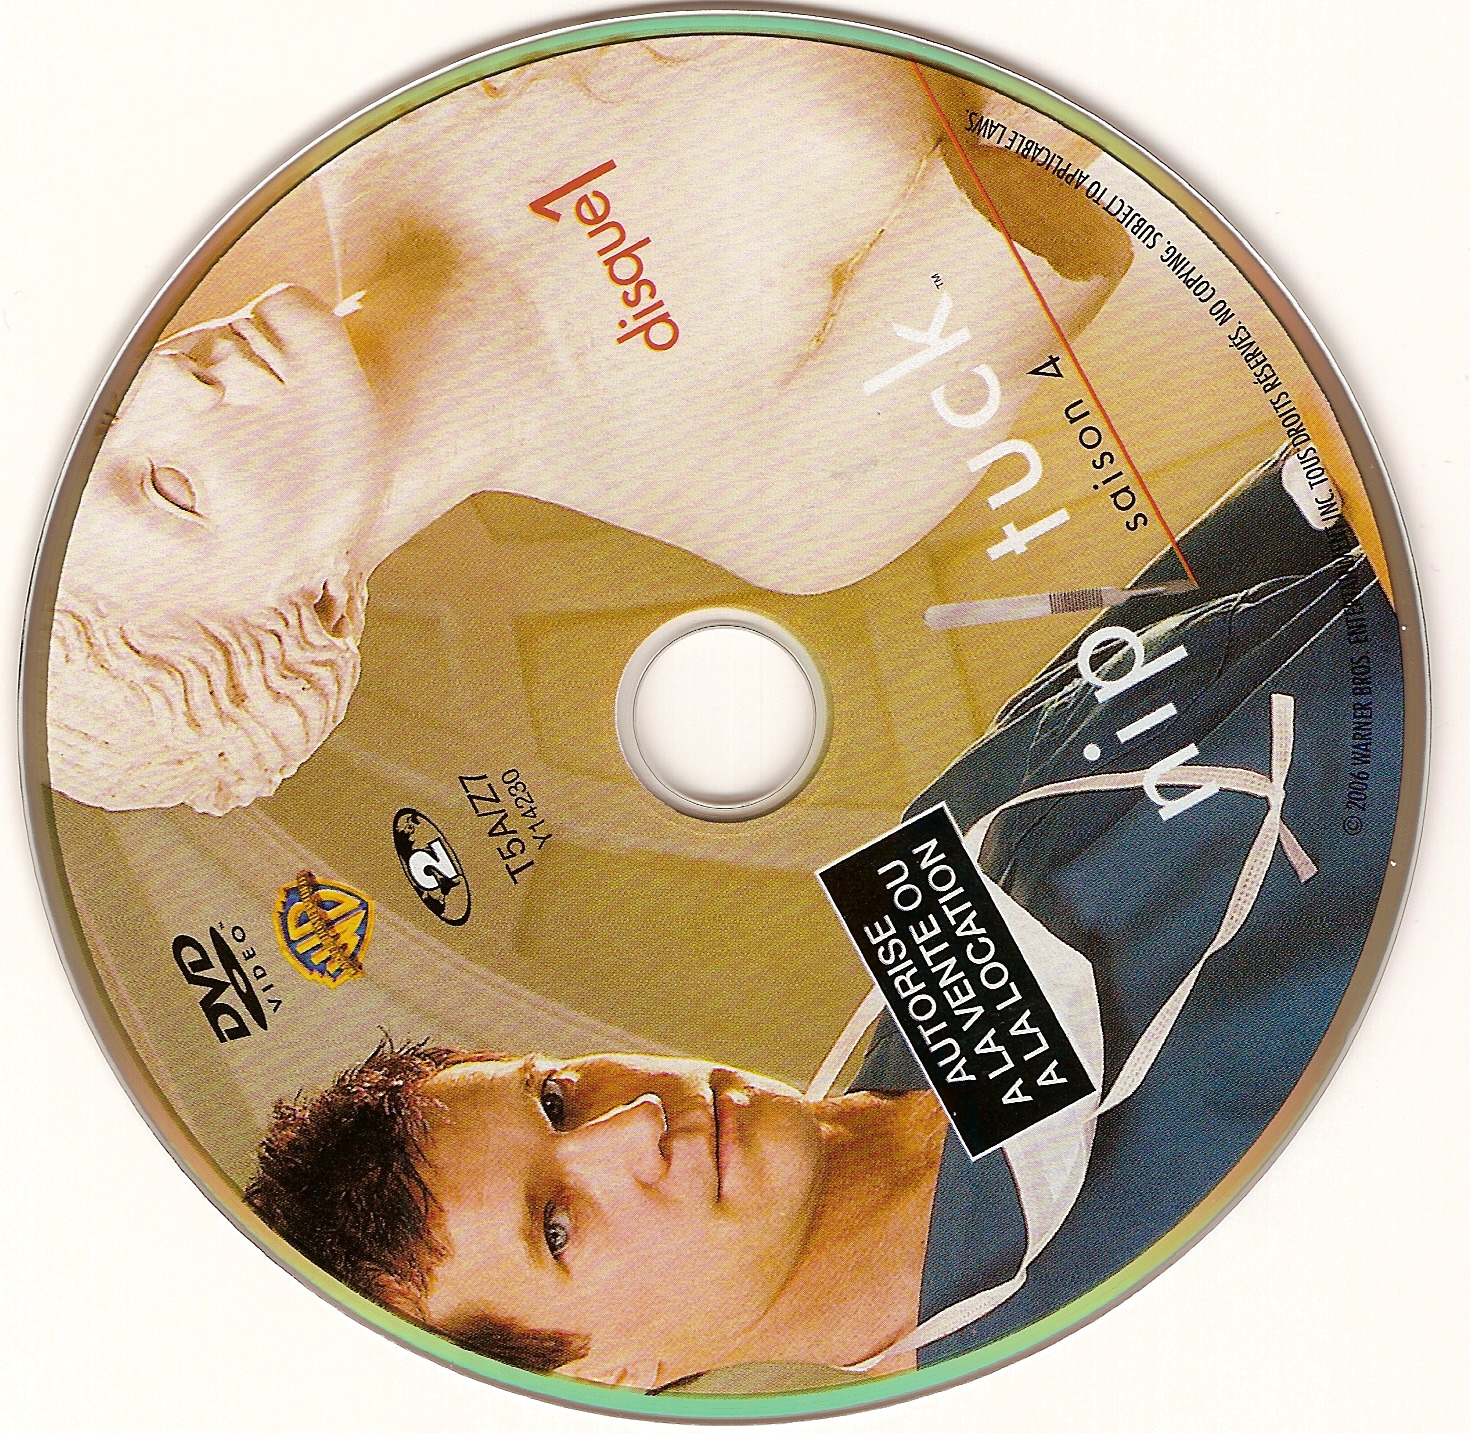 Nip-Tuck saison 4 DVD 1